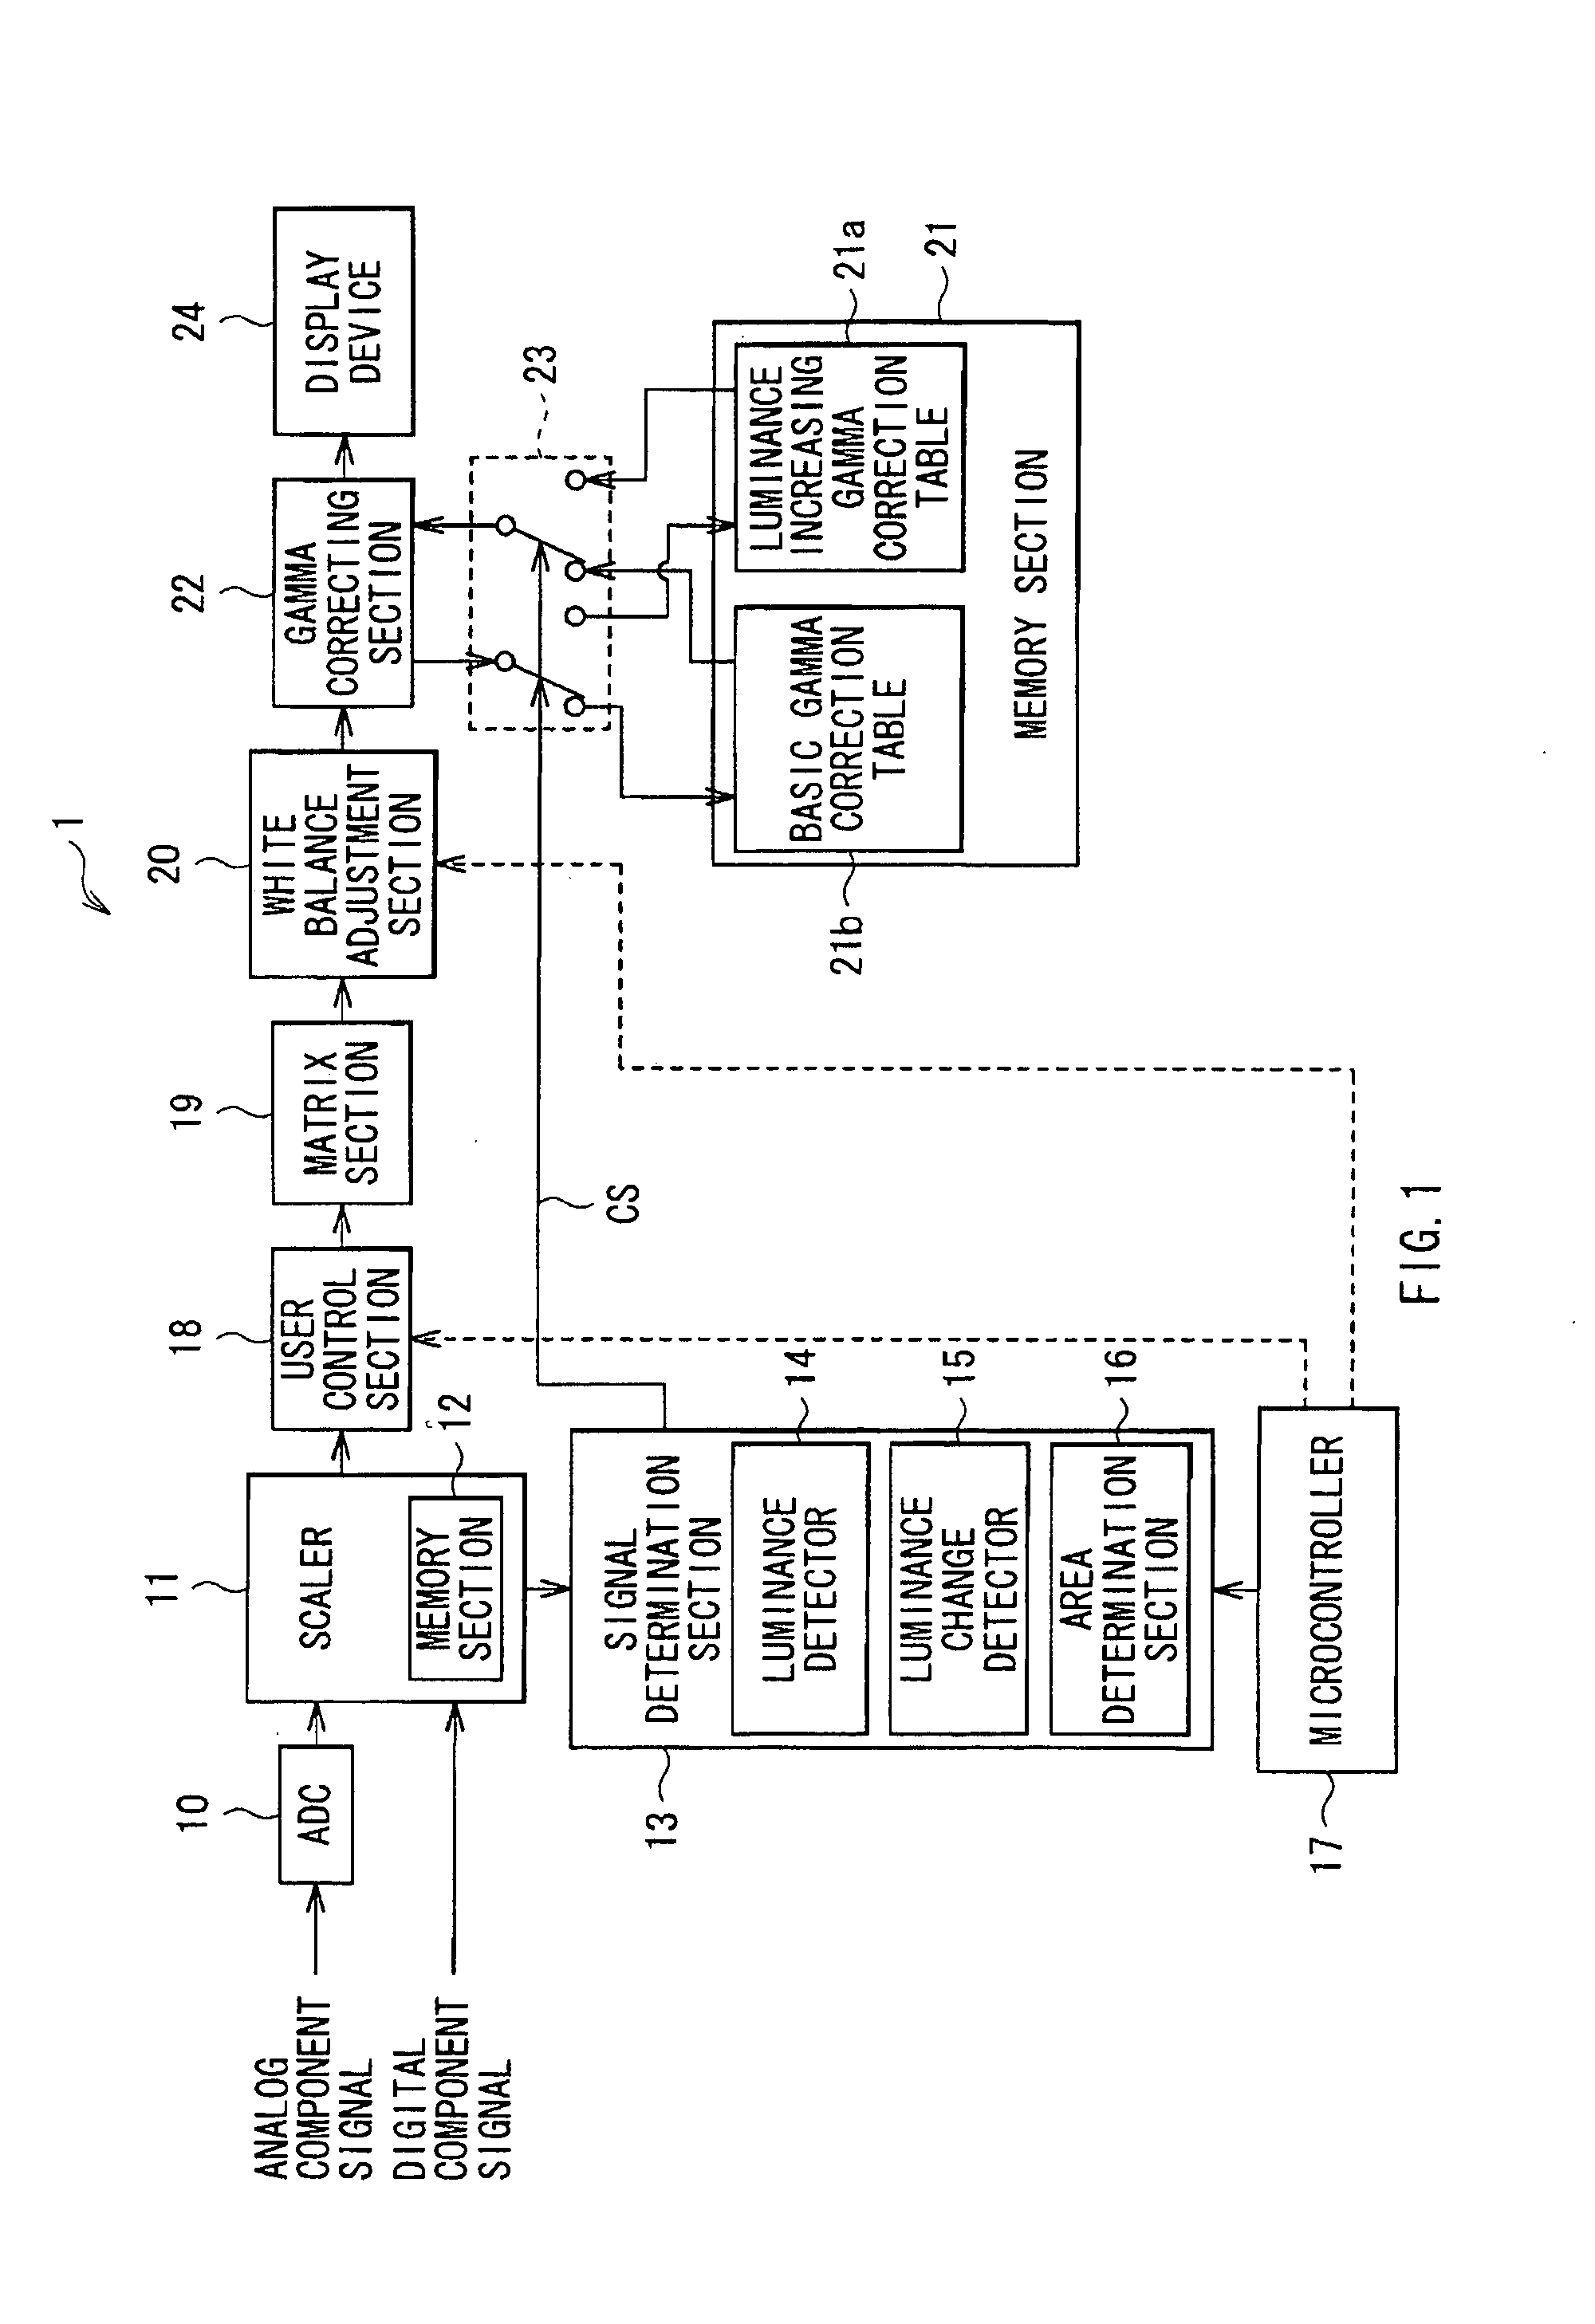 Image processing circuit and image display apparatus